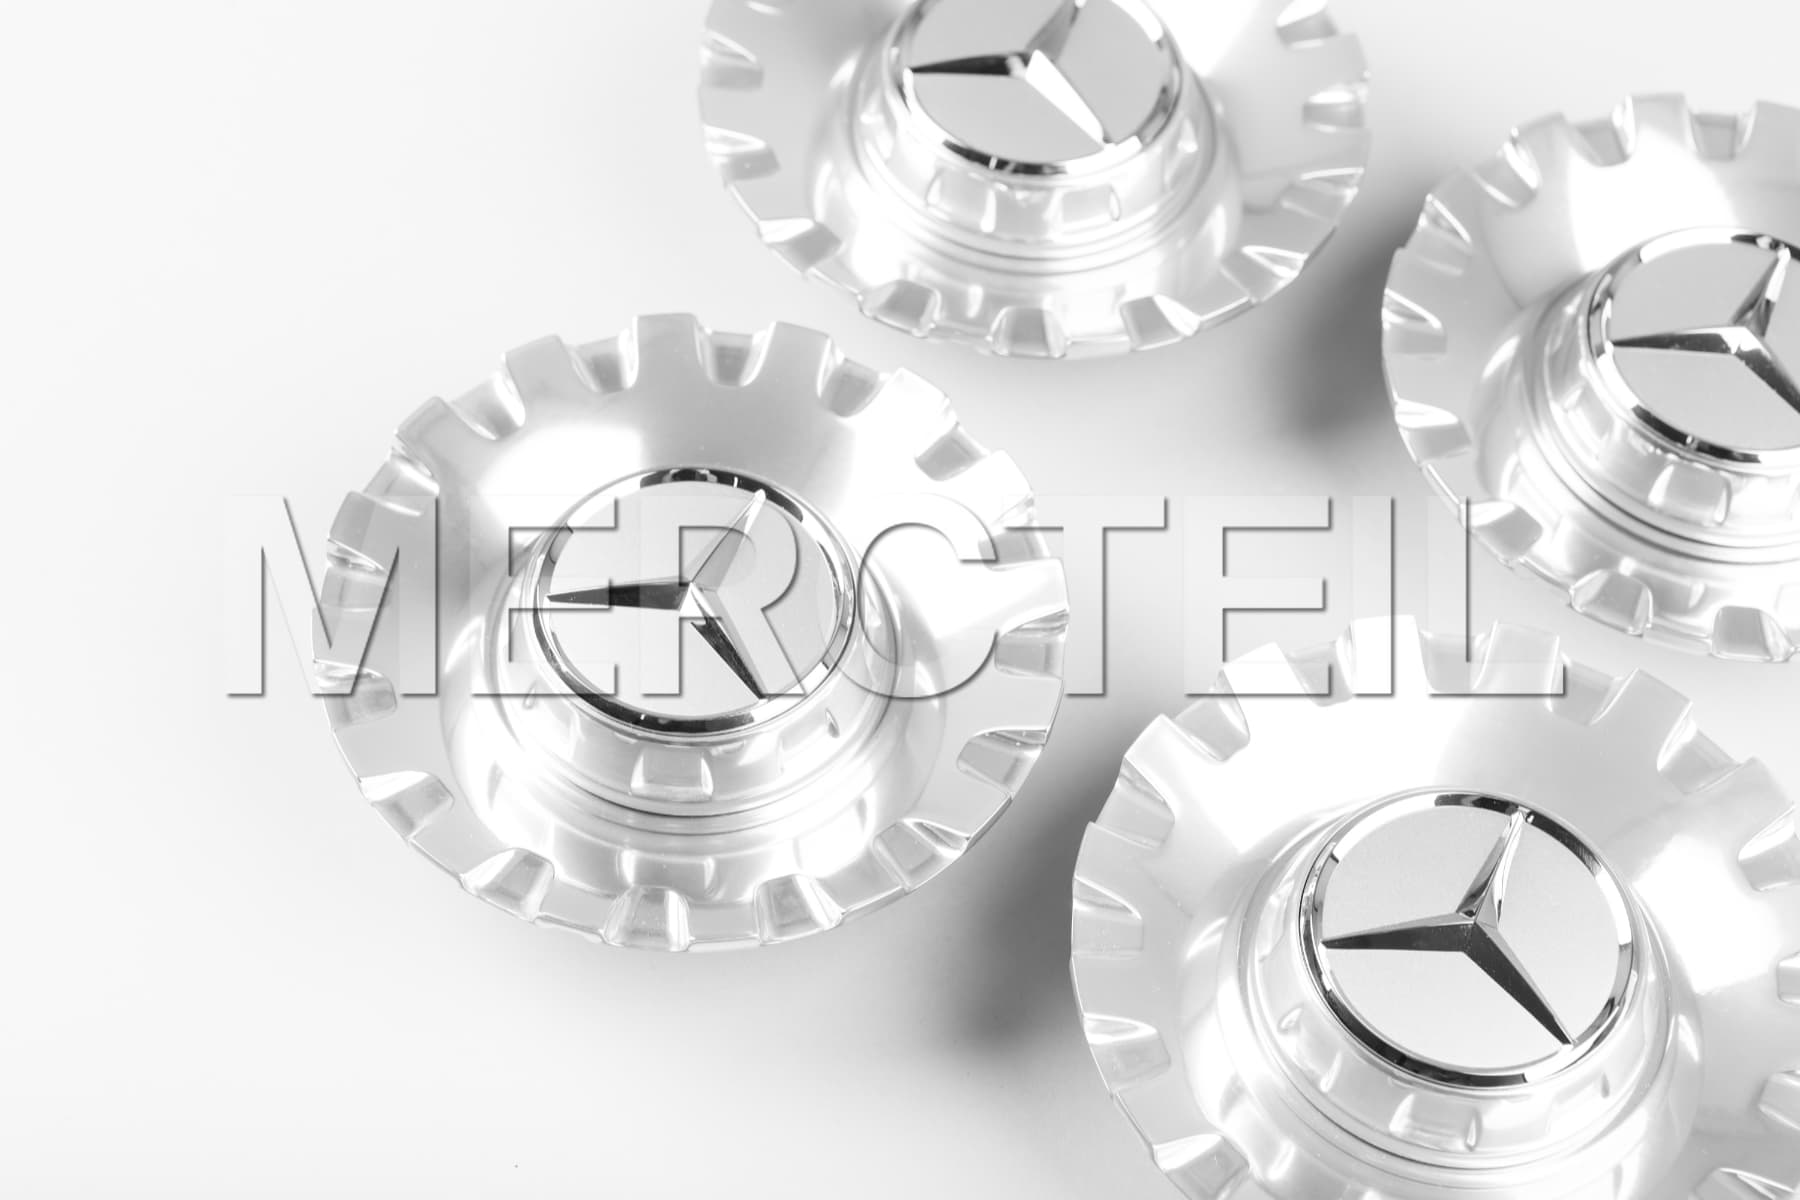 AMG S Class Chrome Center Caps Genuine Mercedes AMG (part number: A22240009007X15)